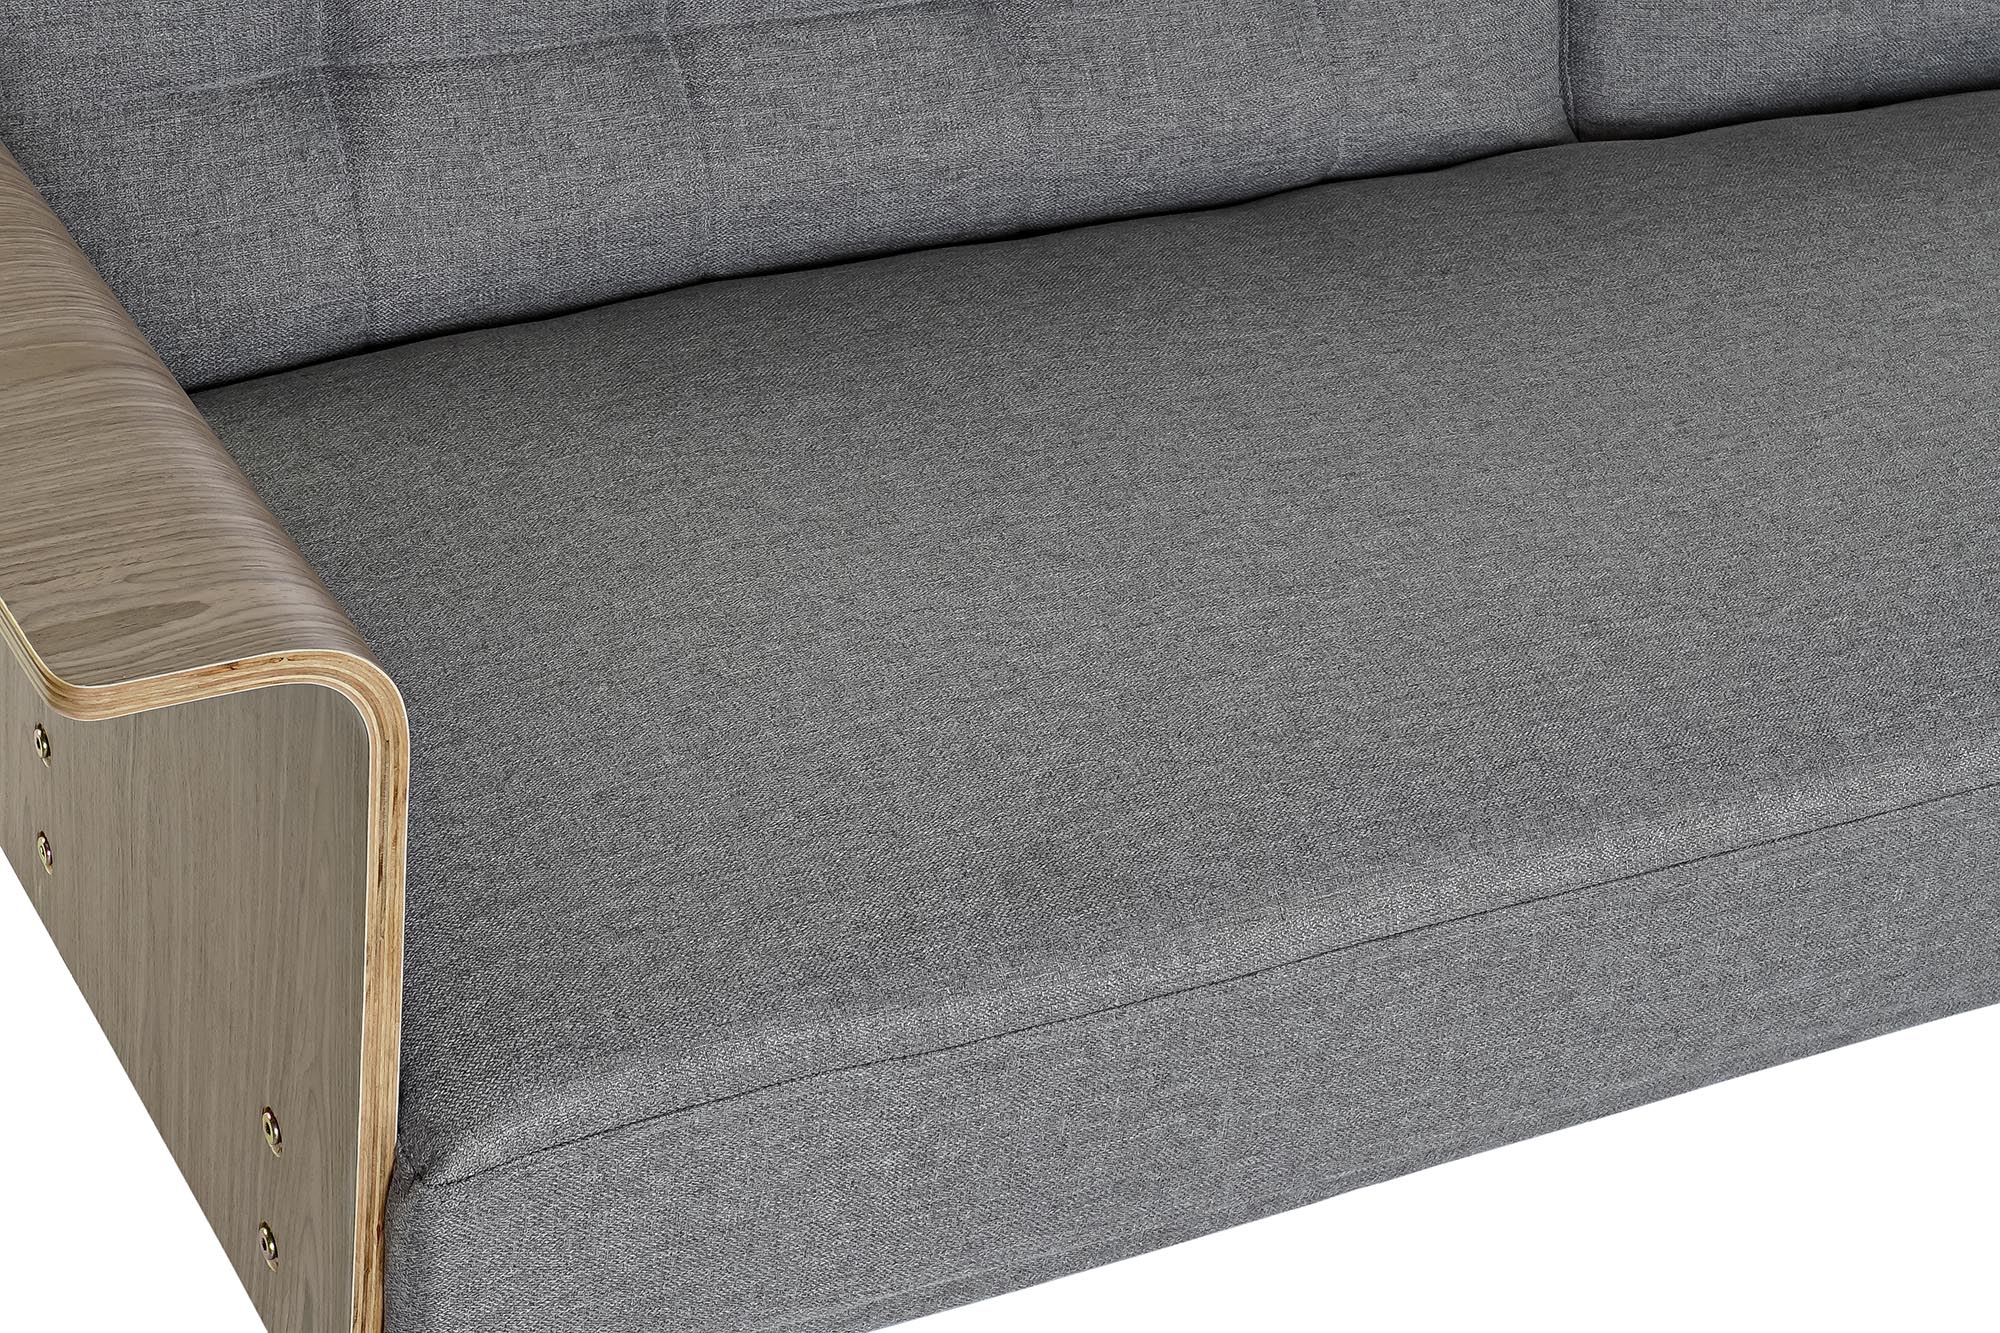 Sofa cama eucalipto metal 203x87x81 gris